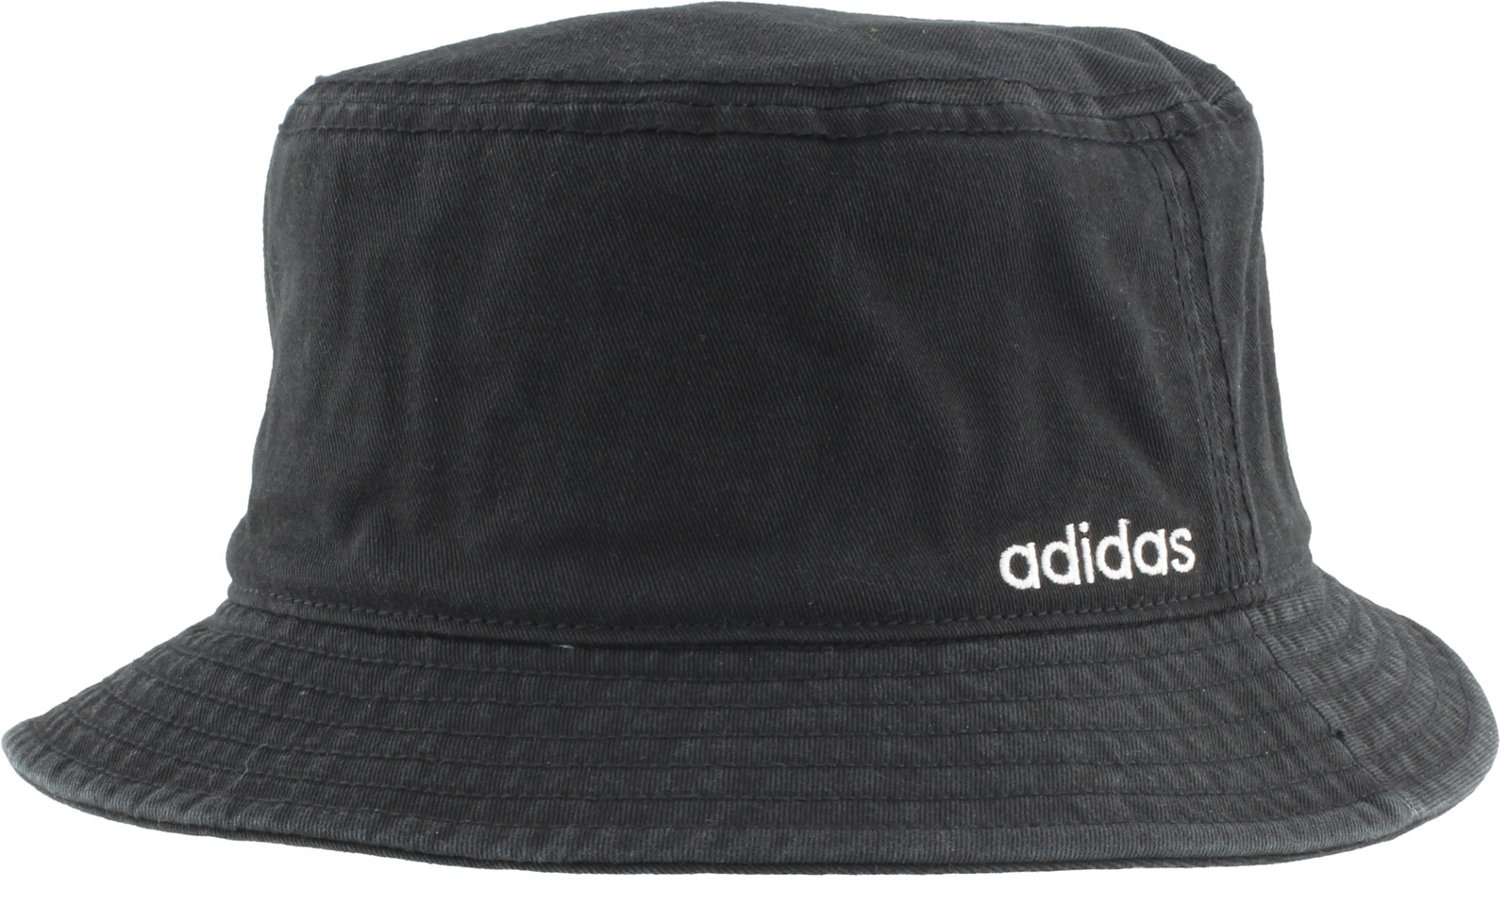 adidas women's hats black